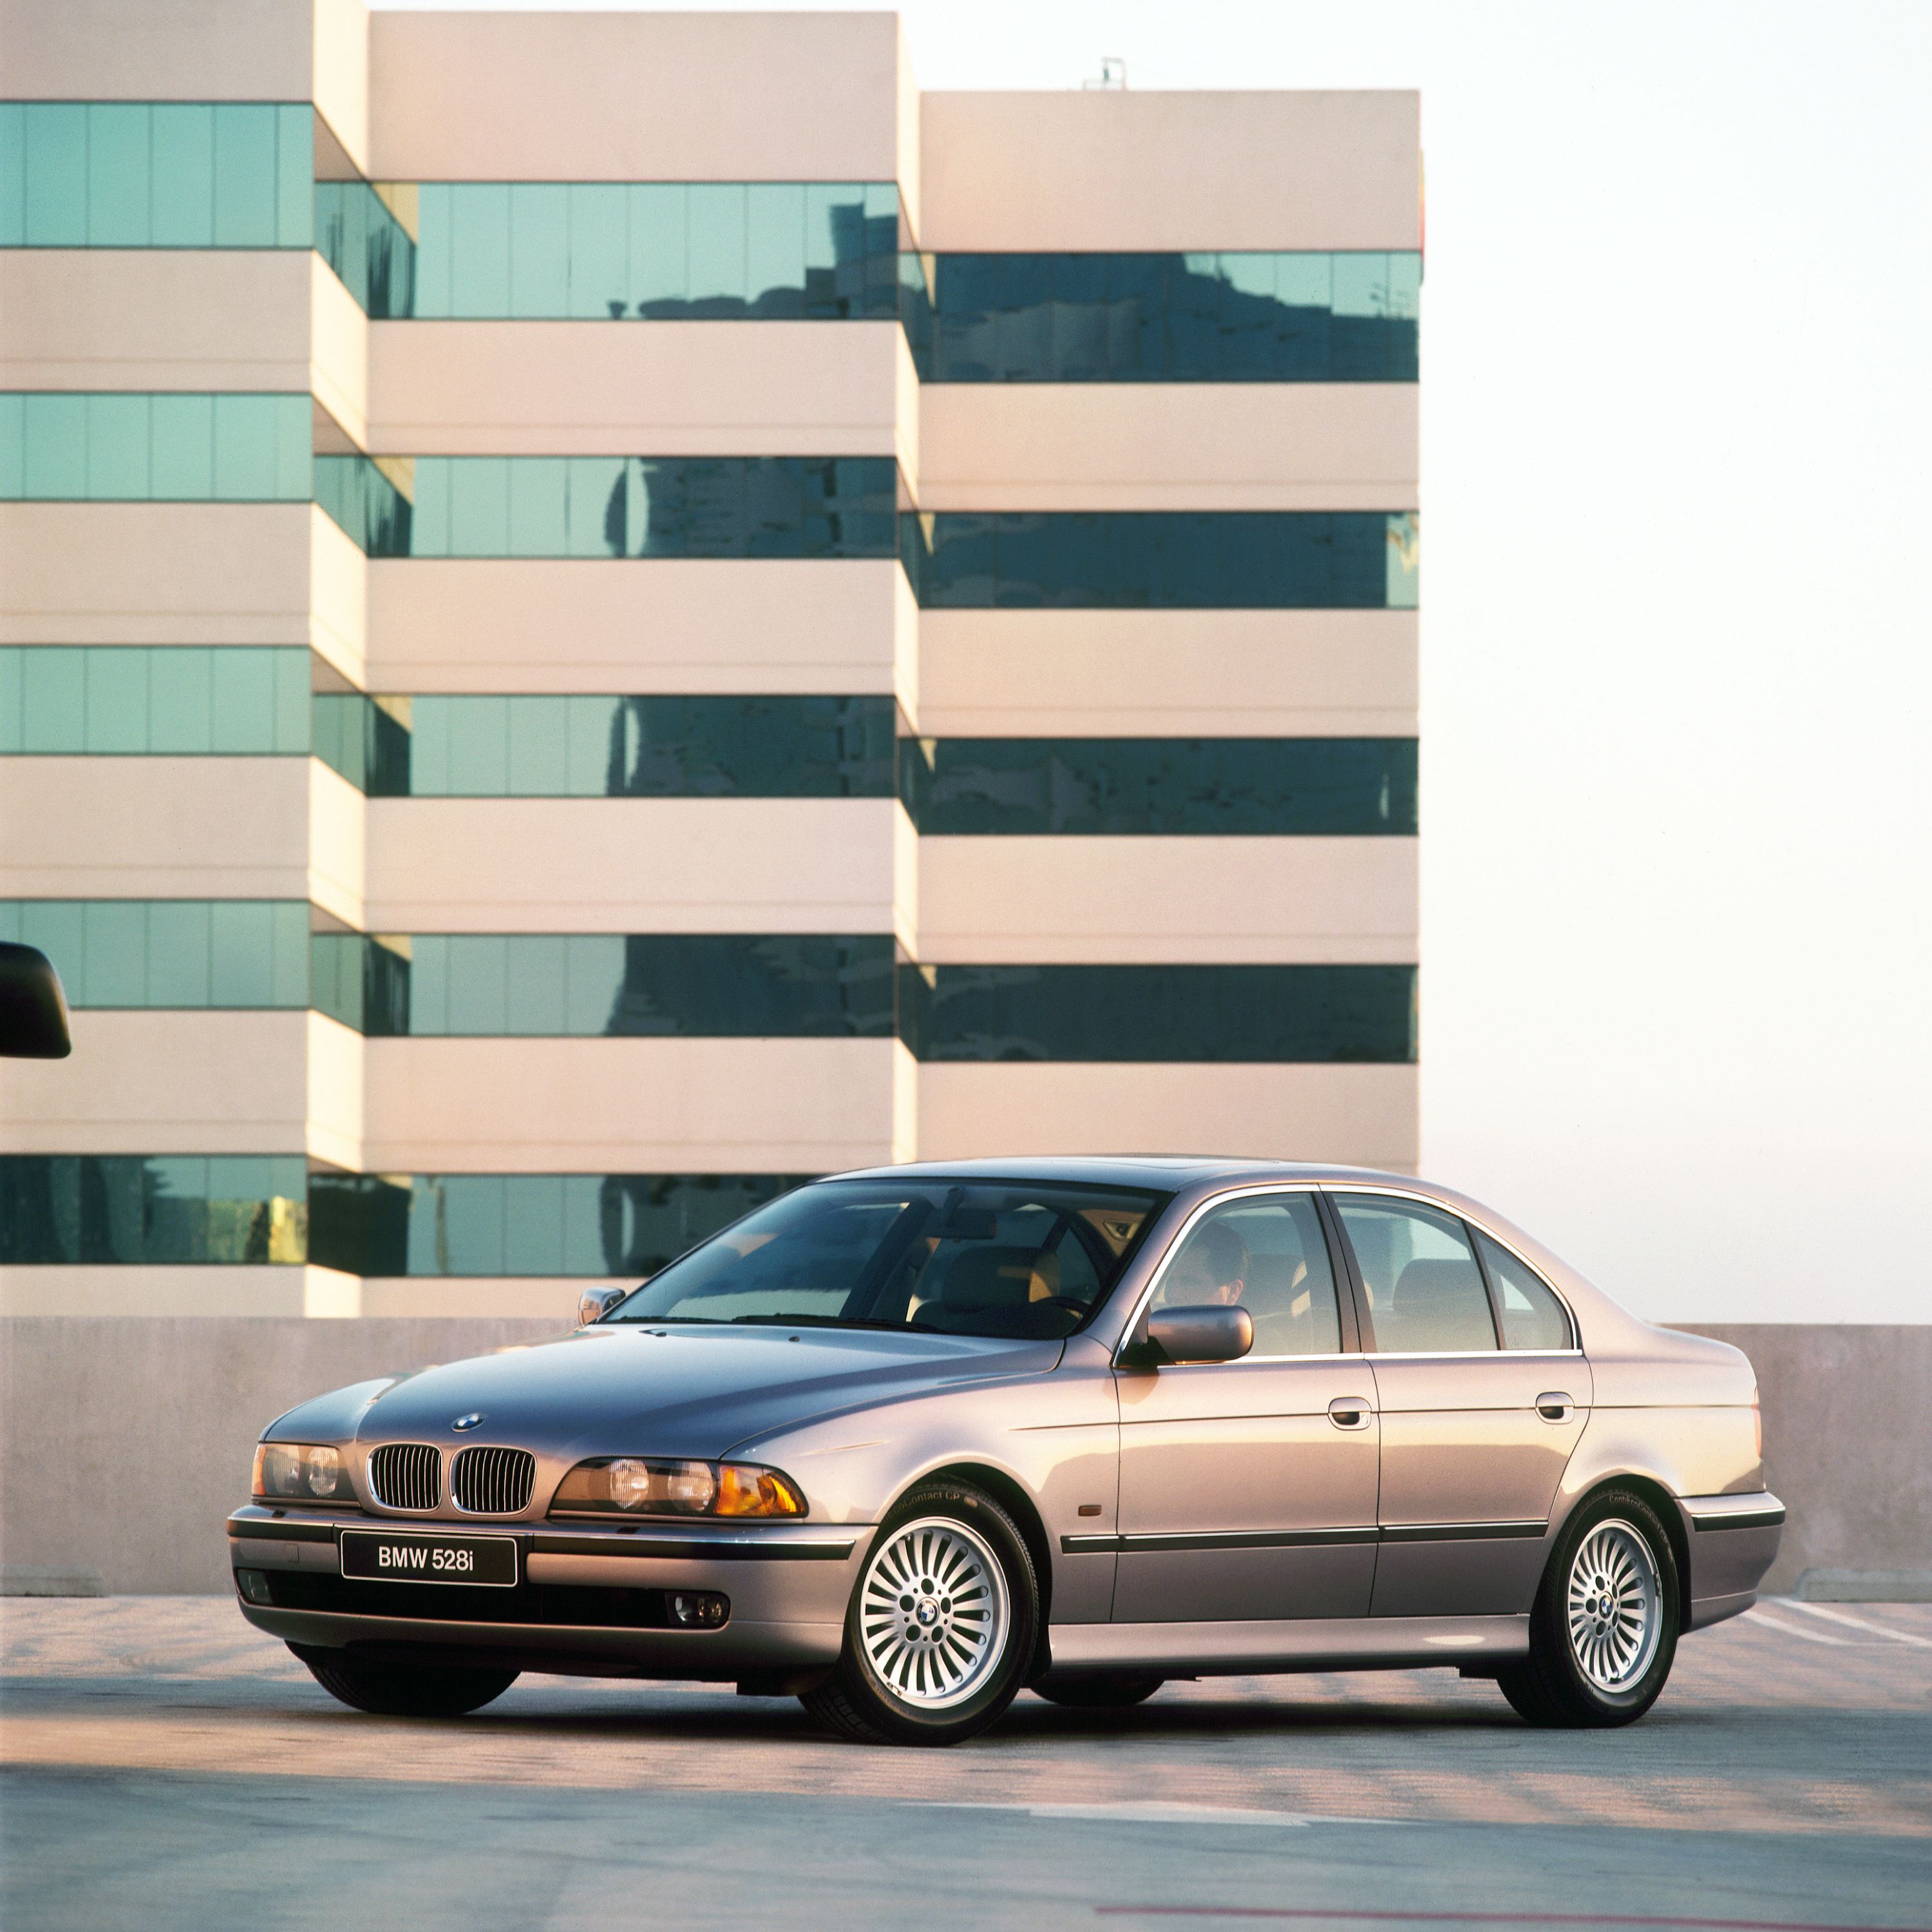 BMW Σειρά 5 Sedan (E39), πλαϊνή λήψη τριών τετάρτων, σταθμευμένη στη ταράτσα σταθμού αυτοκινήτων